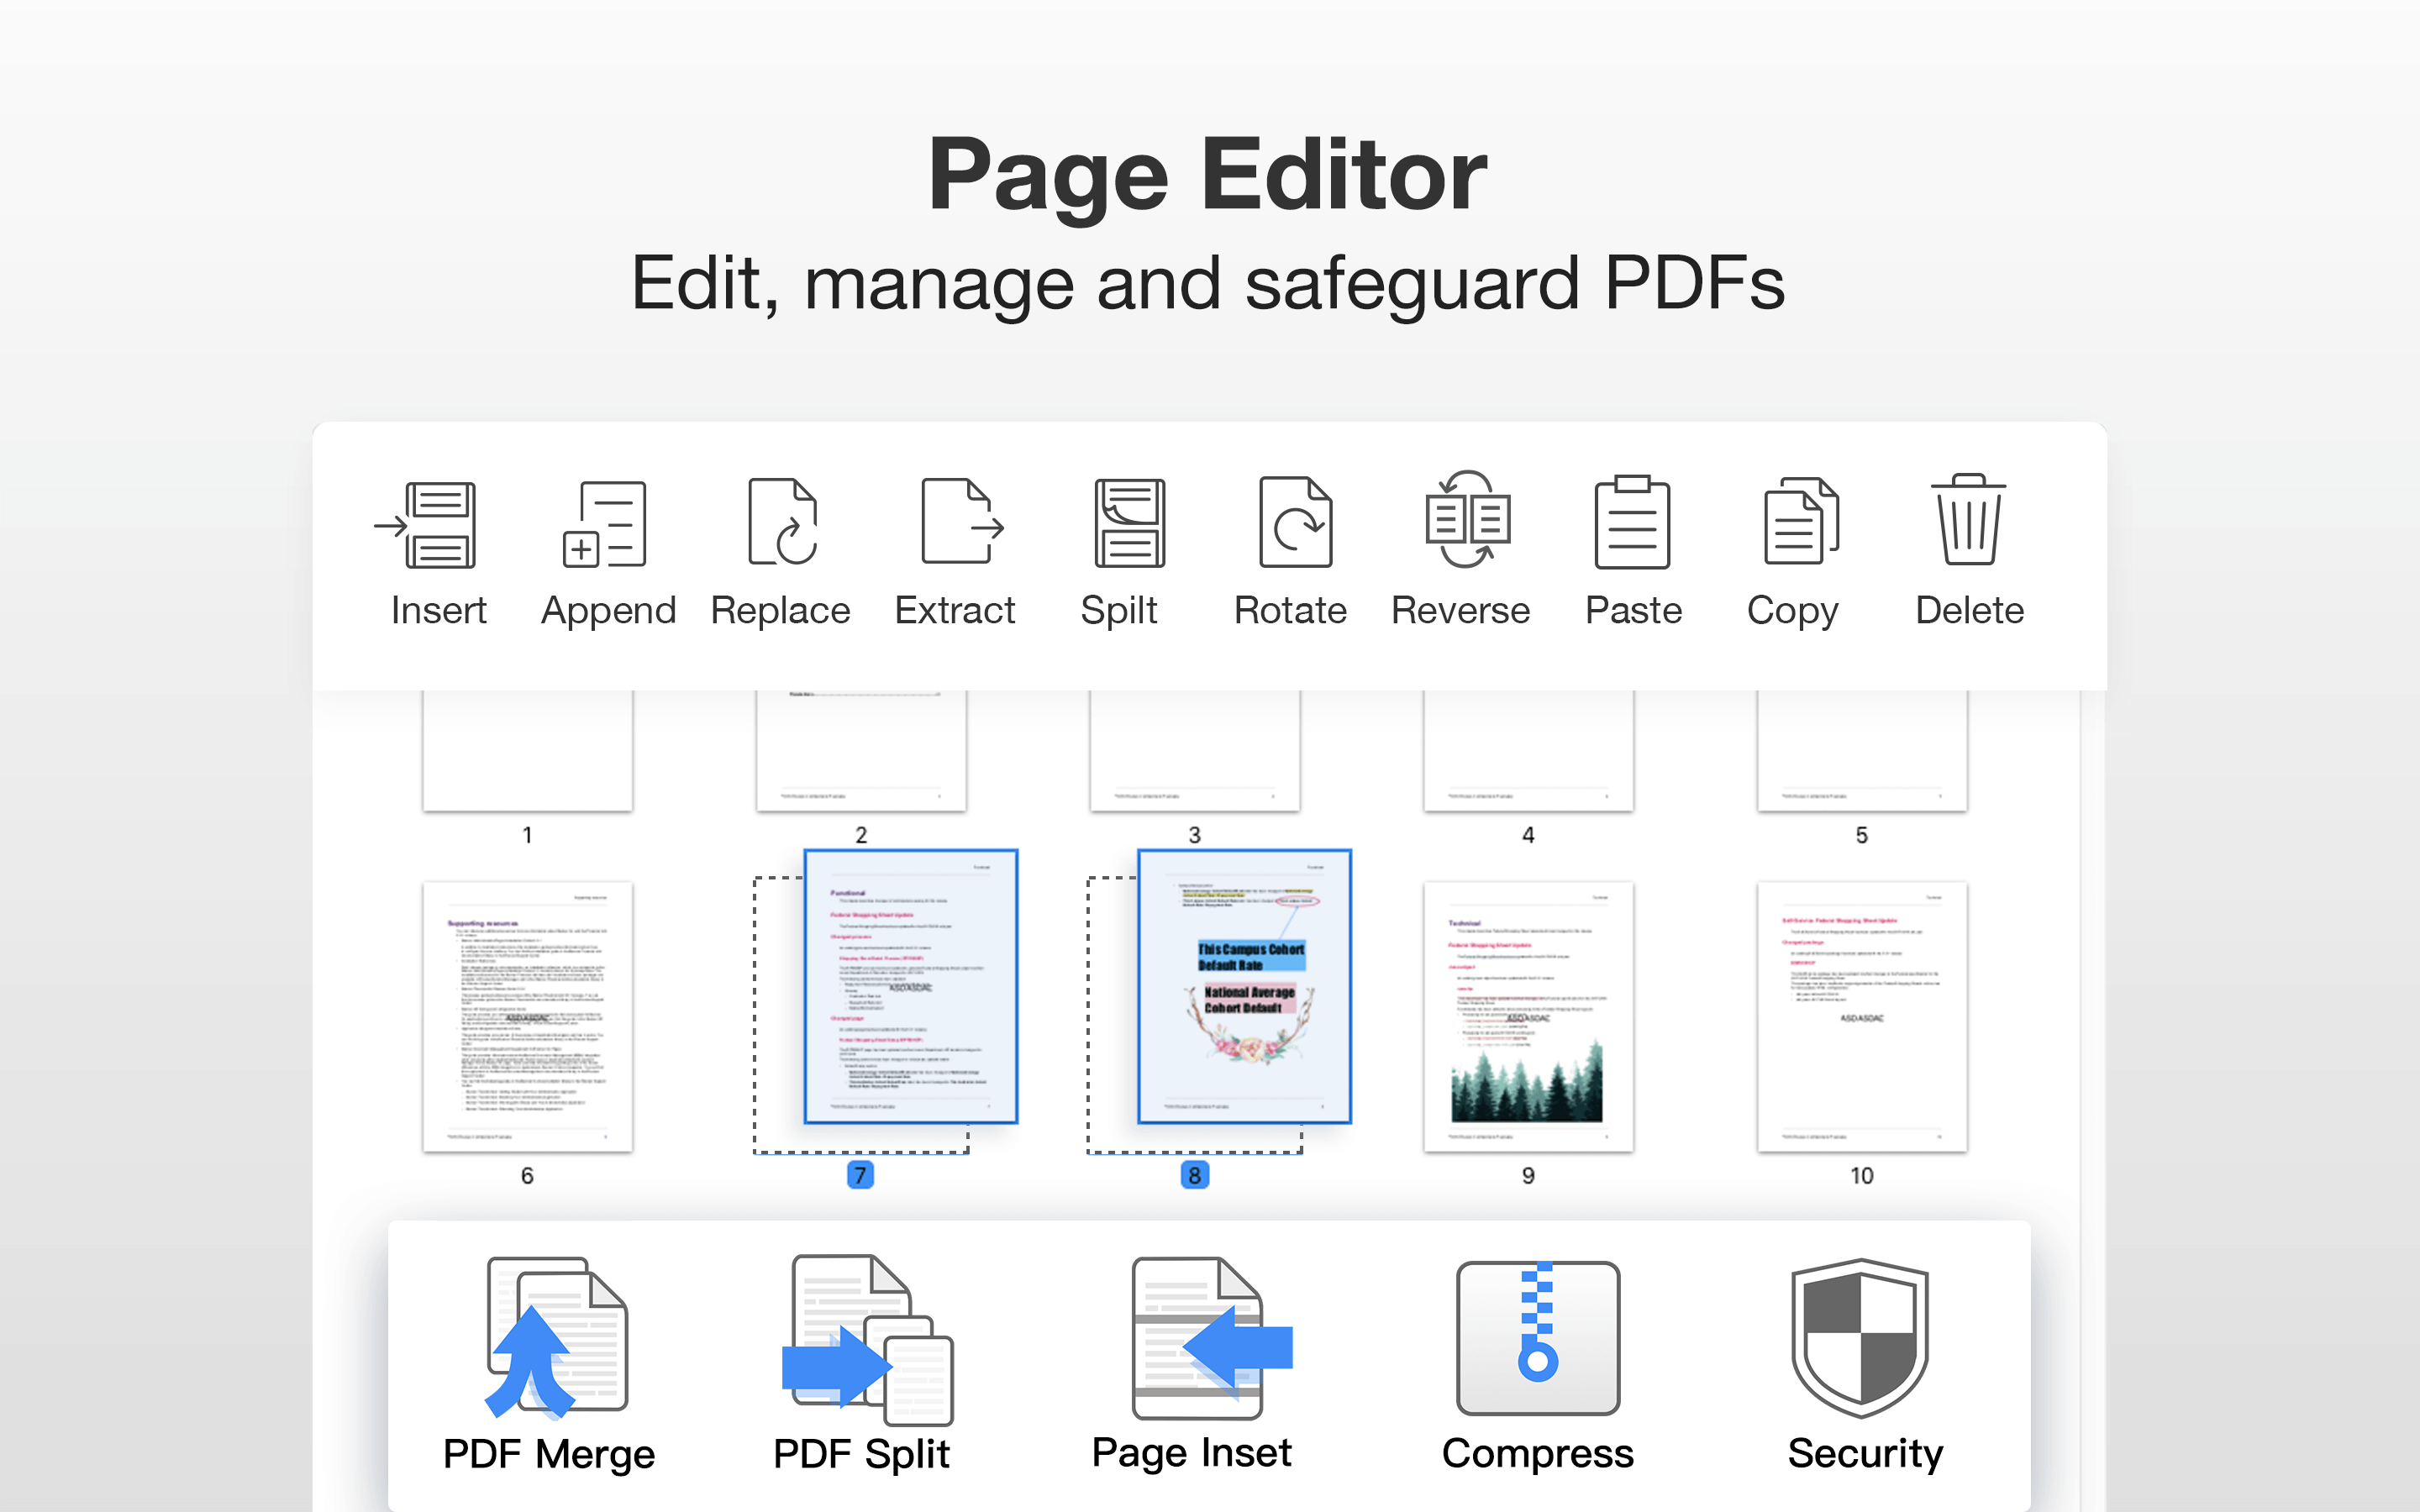 PDF Professional